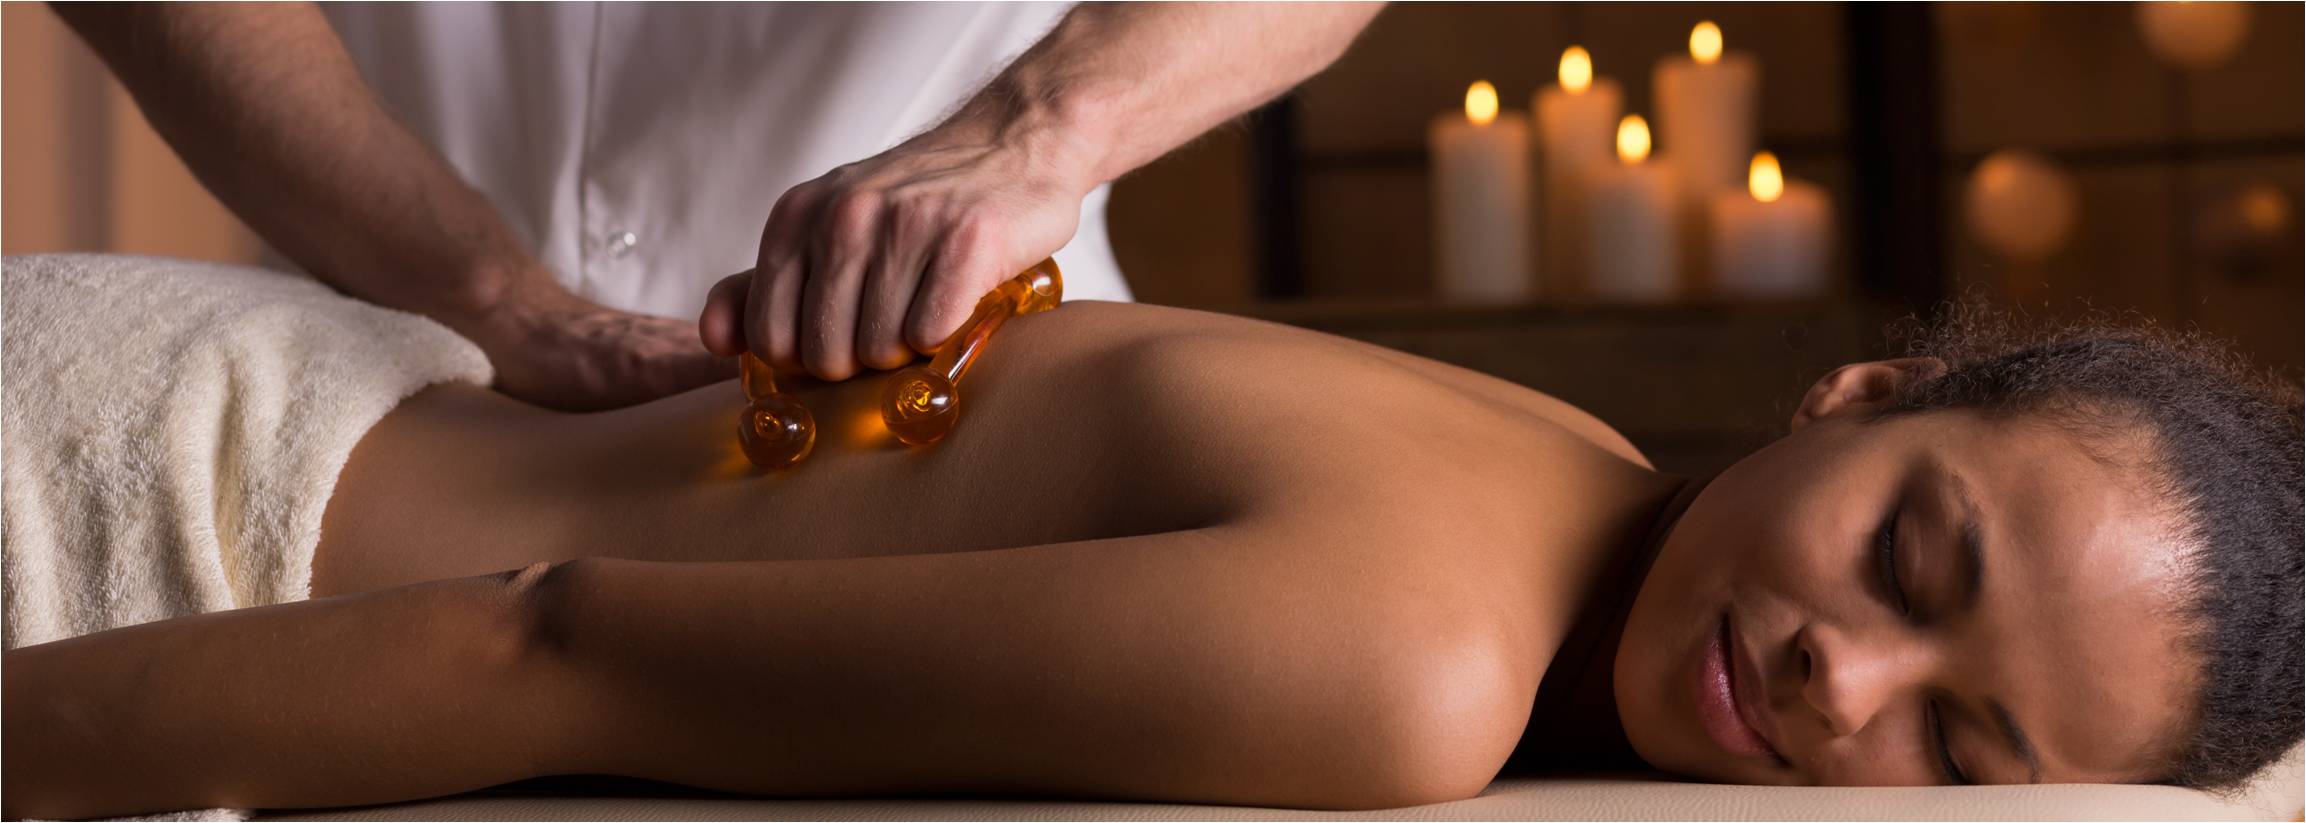 A woman getting a massage by a masseuse